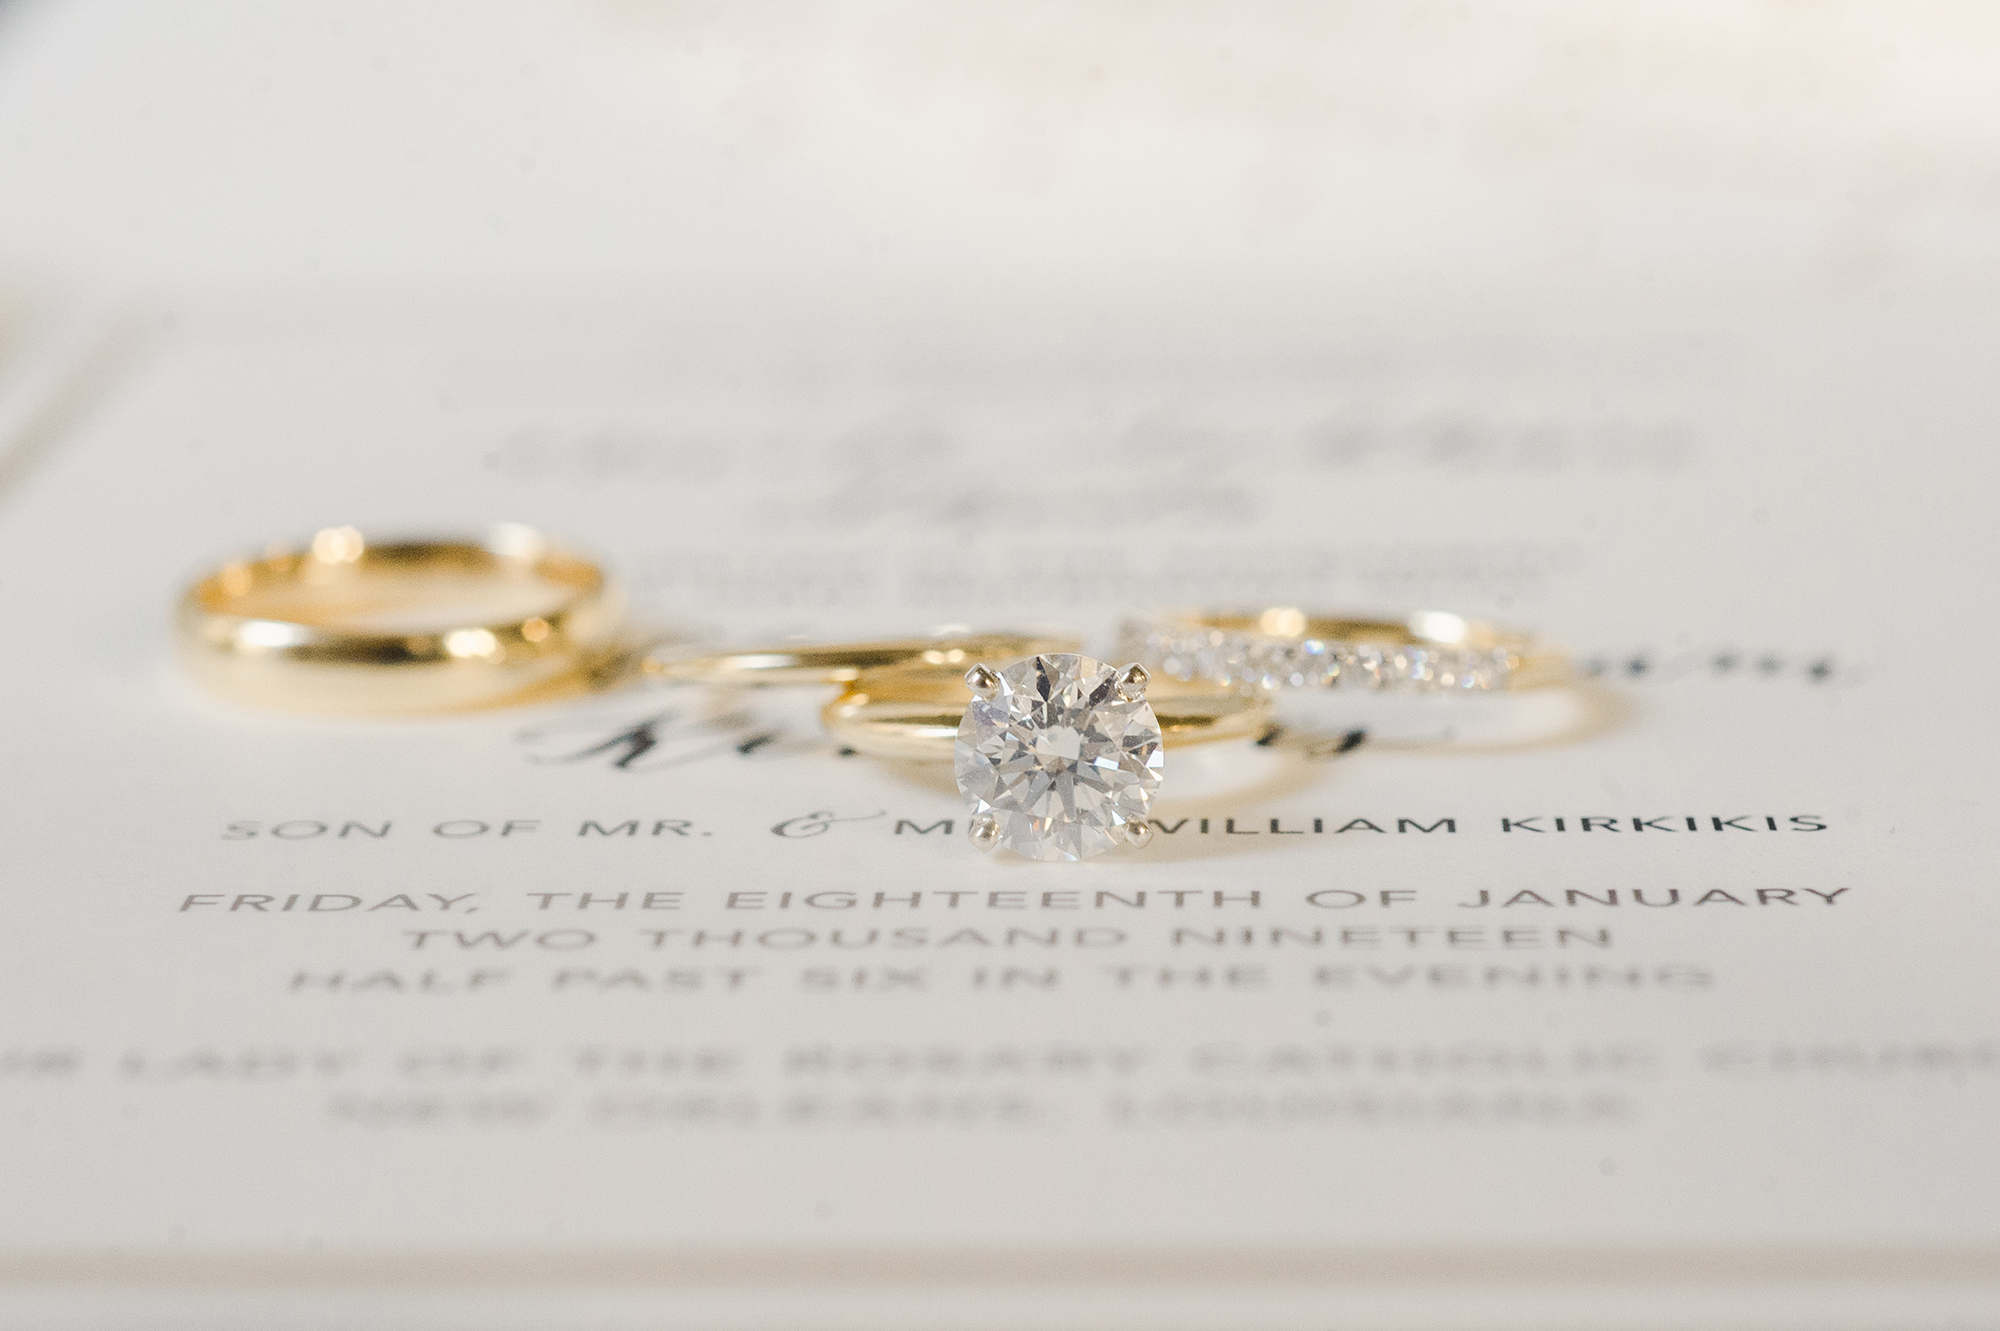 Bride and groom's rings on wedding invitation